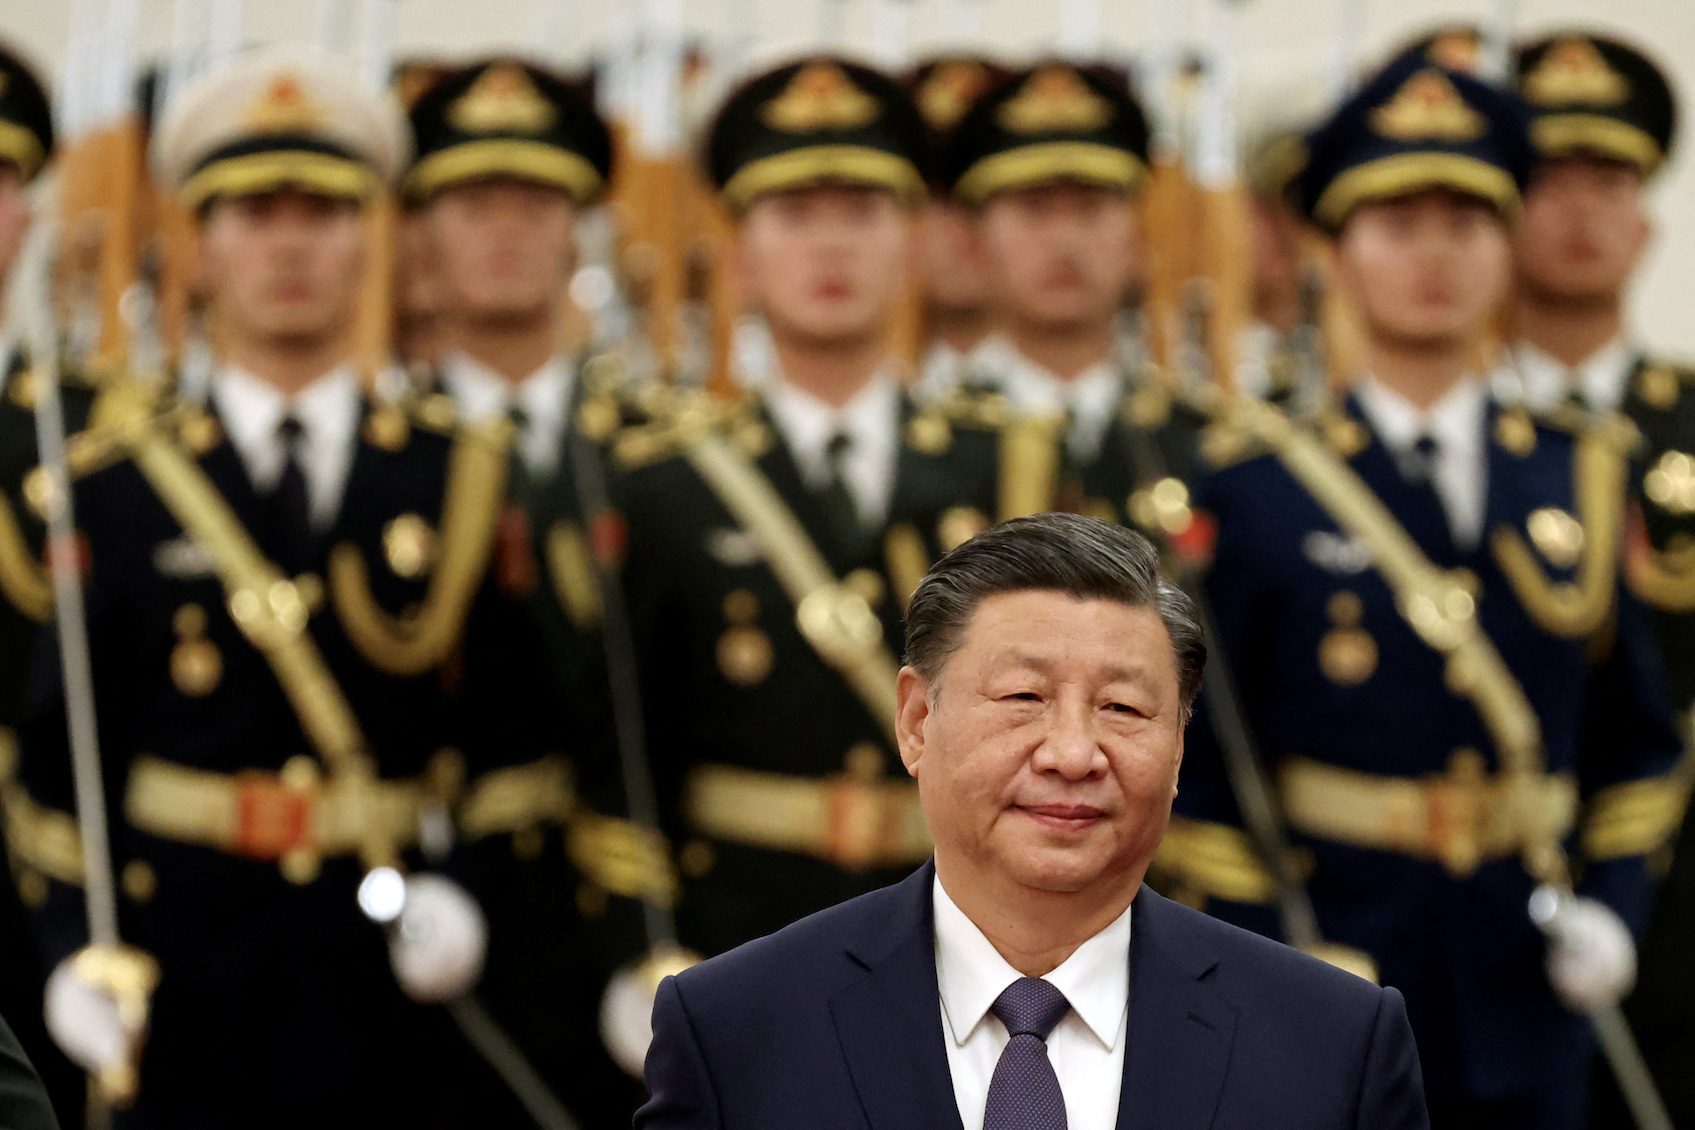 China’s Xi tells coast guard to enforce maritime law